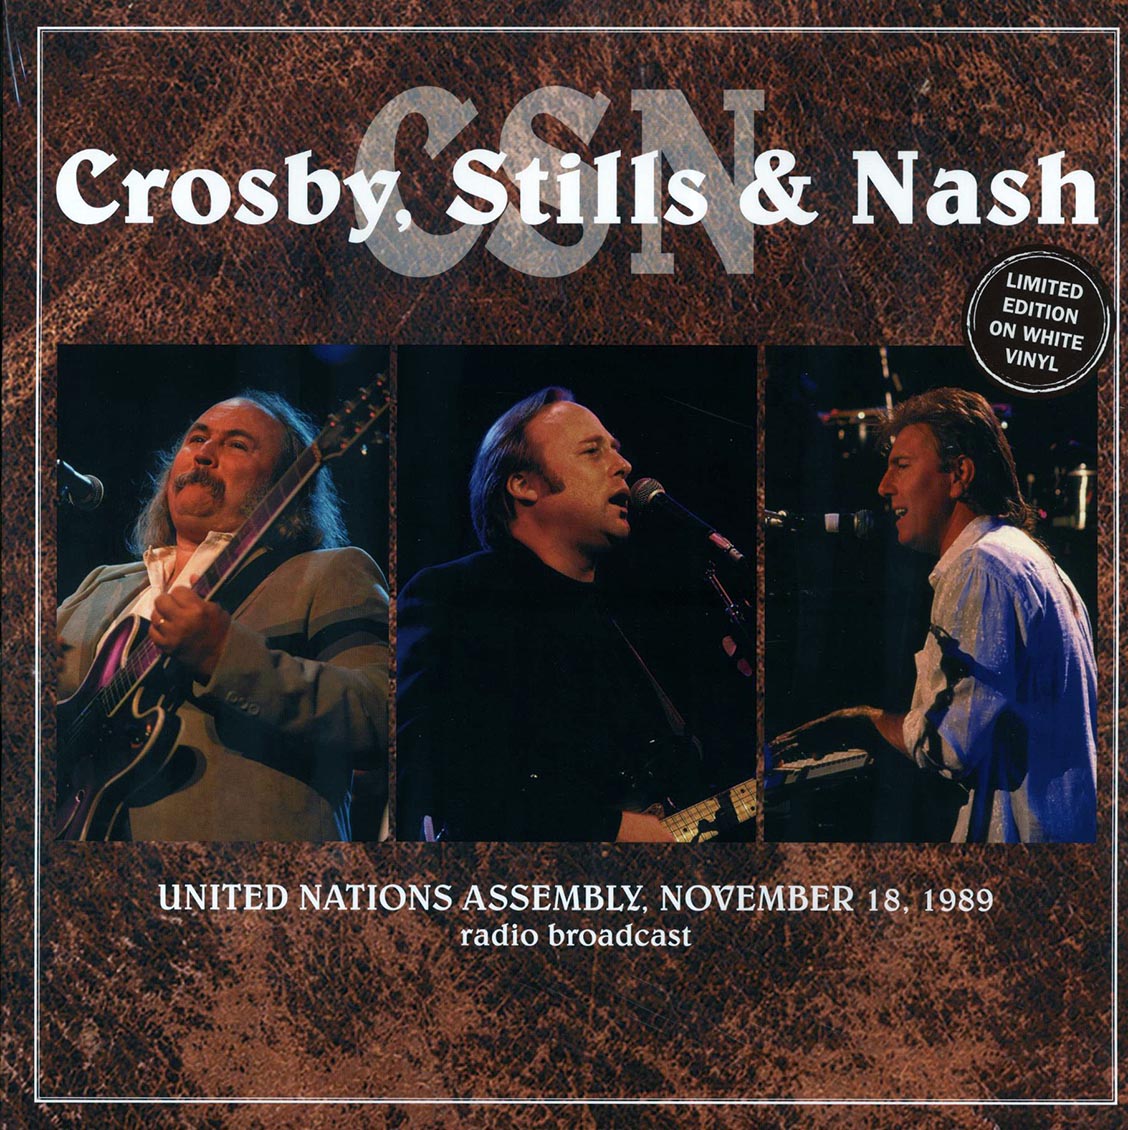 Crosby, Stills & Nash - United Nations Assembly, November 18, 1989 (ltd. 500 copies made) (white vinyl) - Vinyl LP